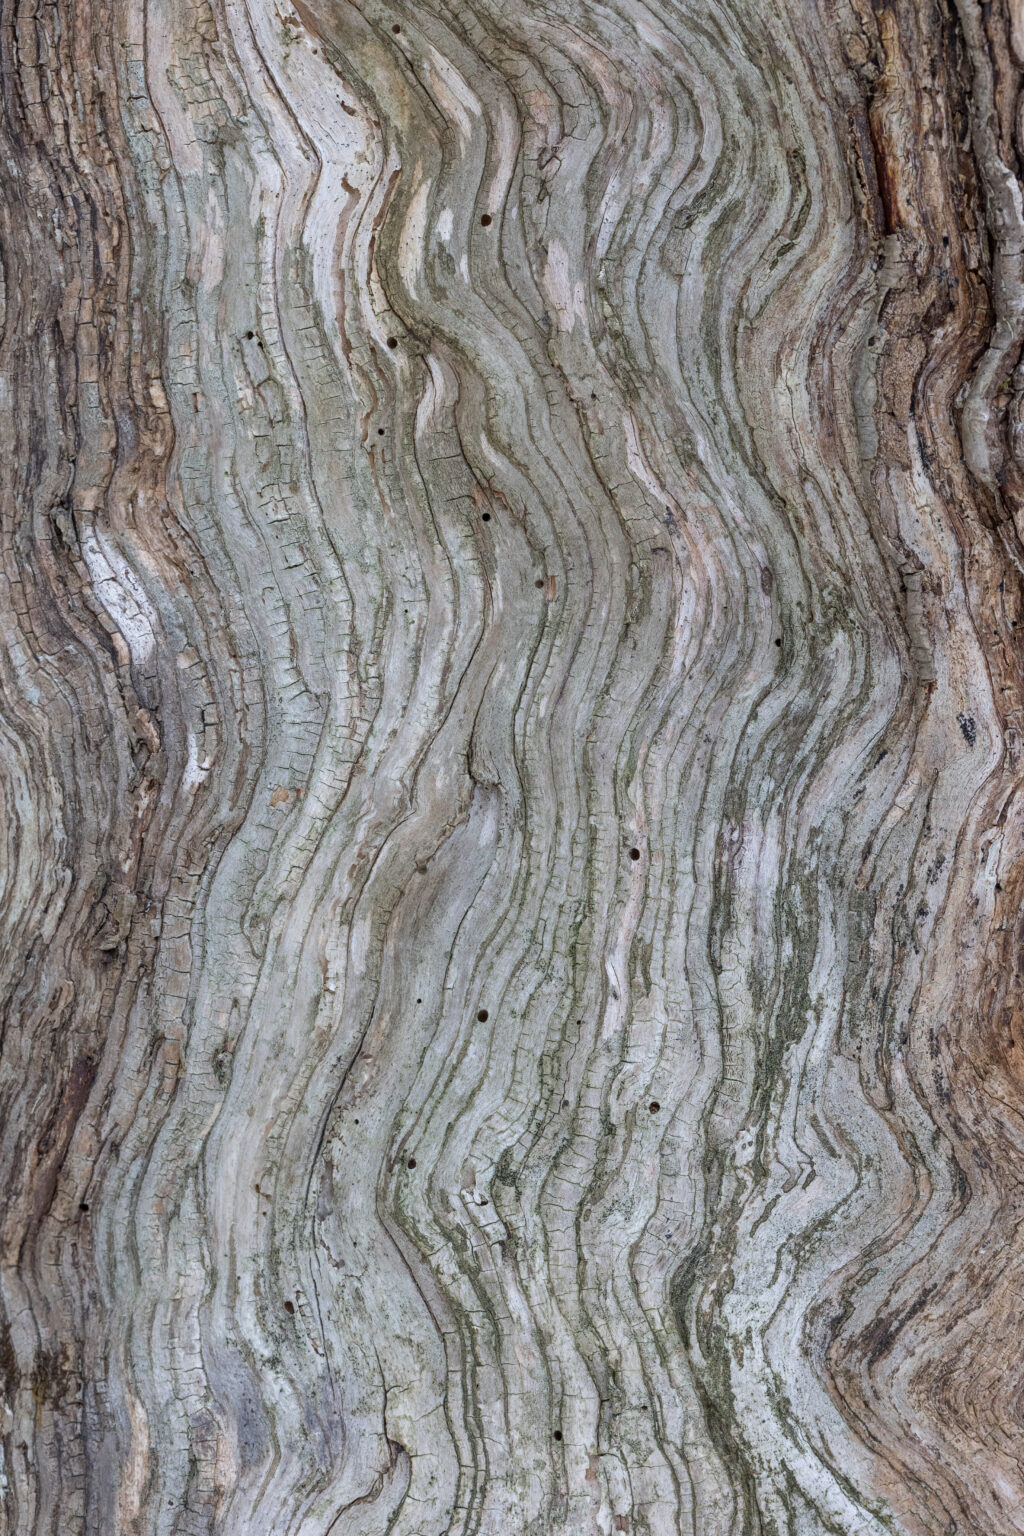 Wavy Woodgrain Texture